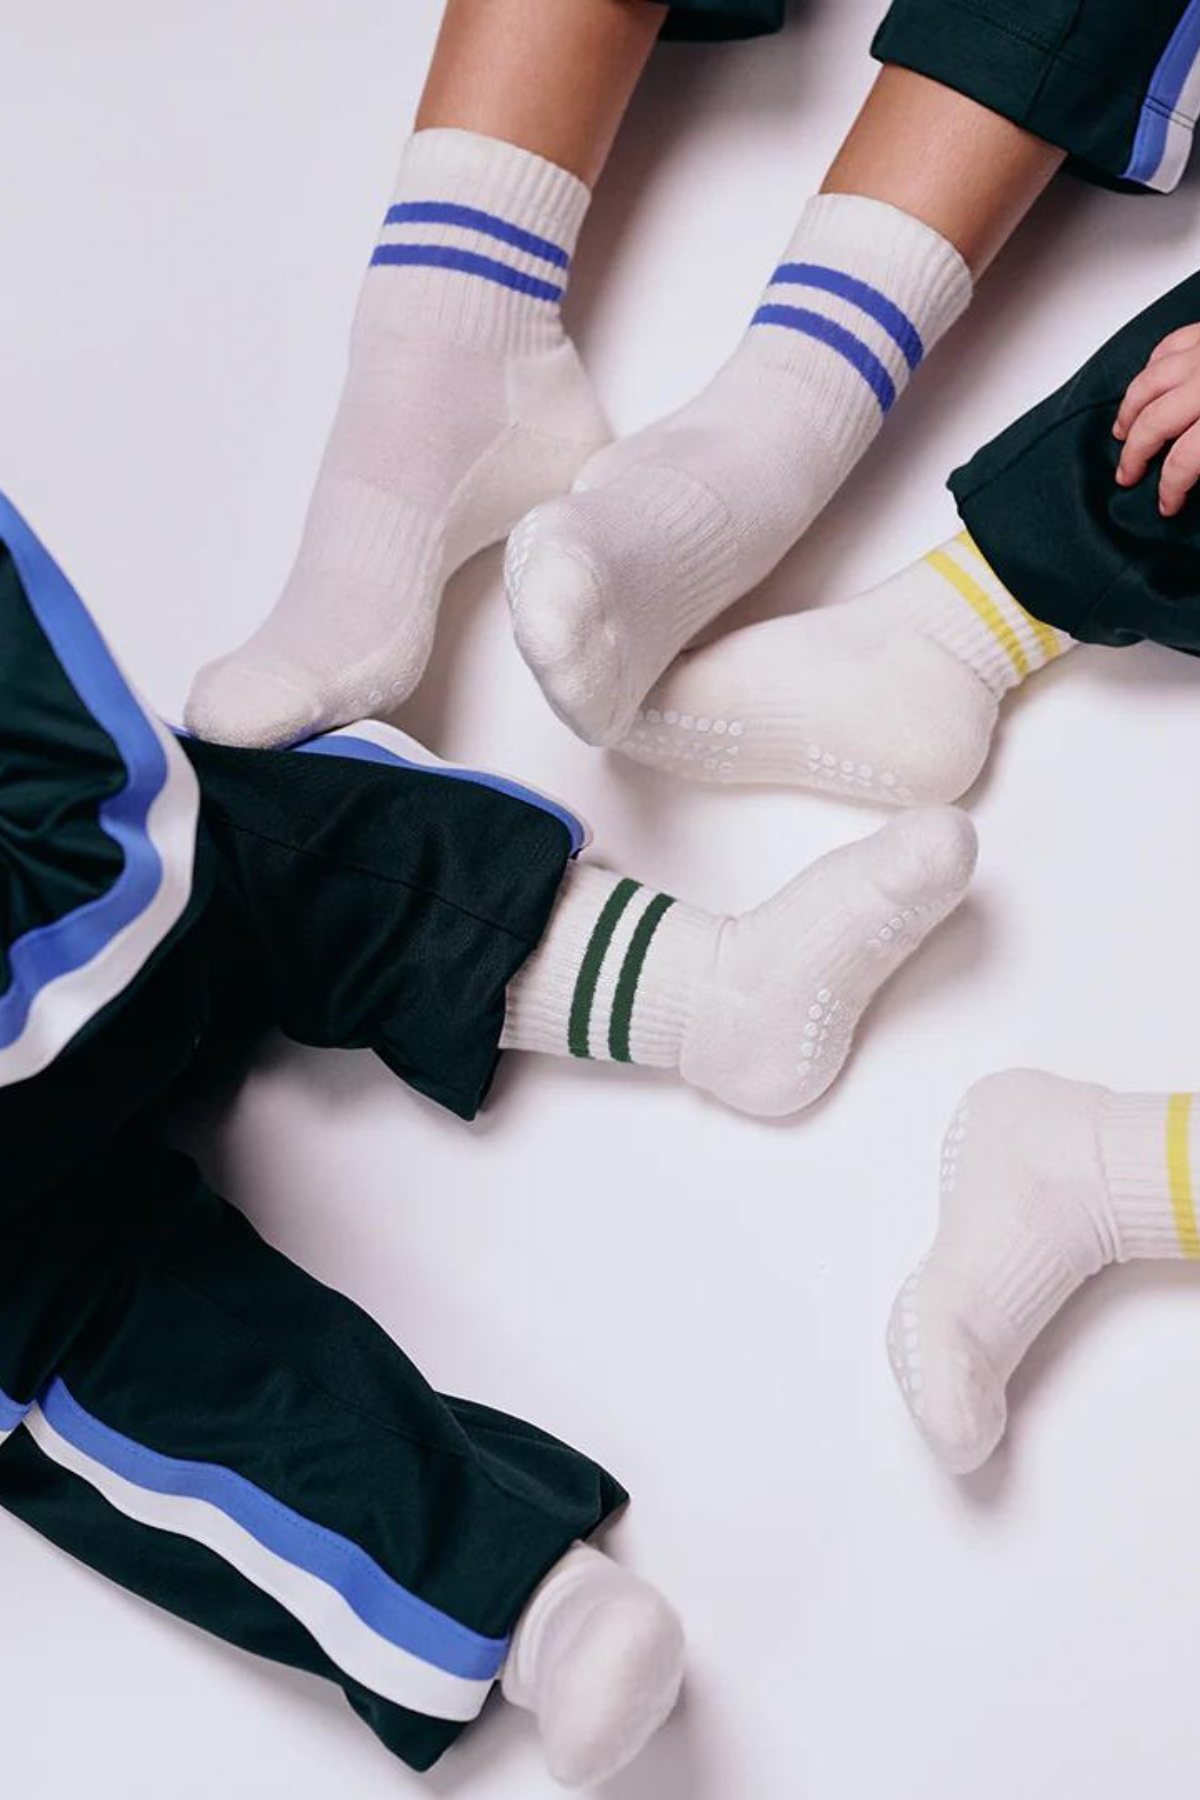 Stopper Socken "Sporty" | verschiedene Farben